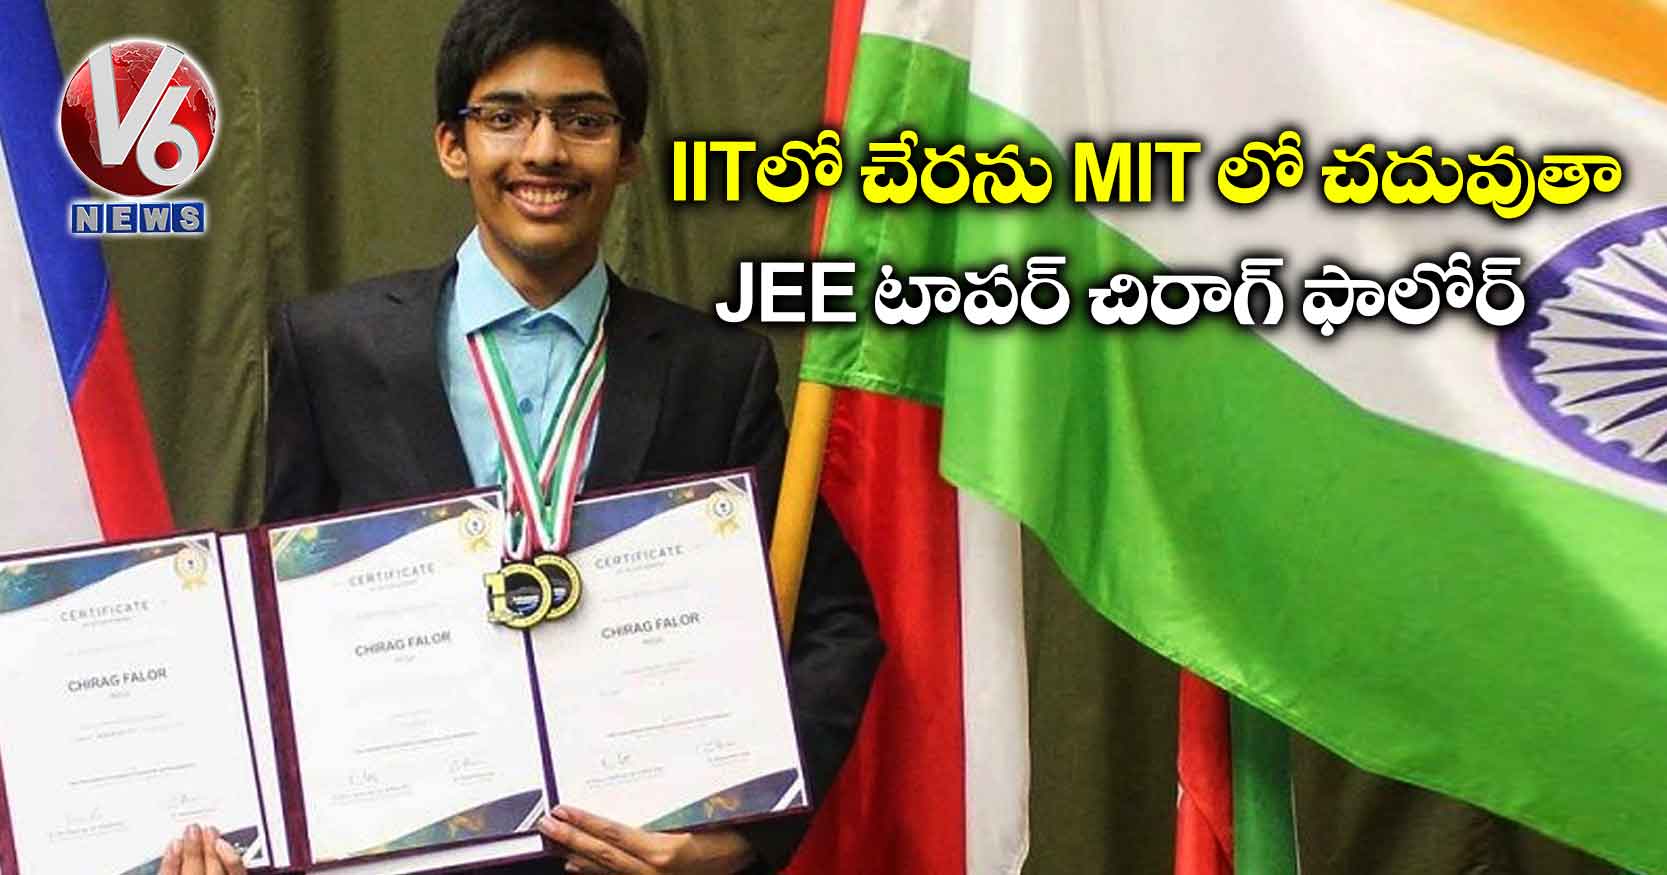 IITలో చేరను MIT లో చదువుతా: JEE టాపర్ చిరాగ్ ఫాలోర్